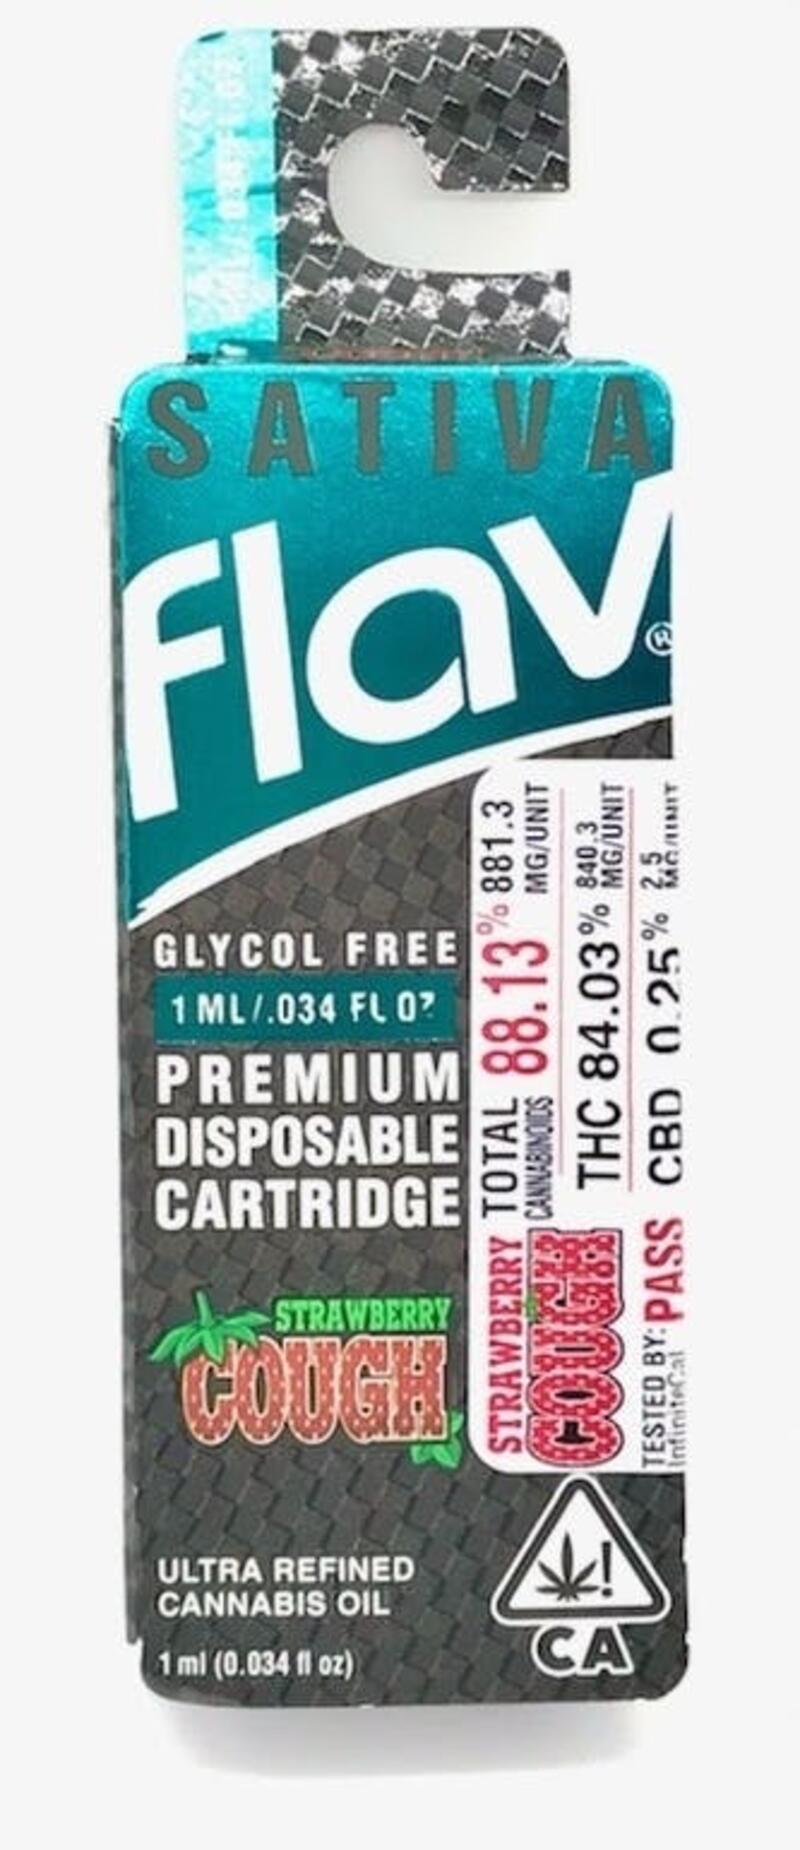 Flav - Strawberry Cough - 1ml